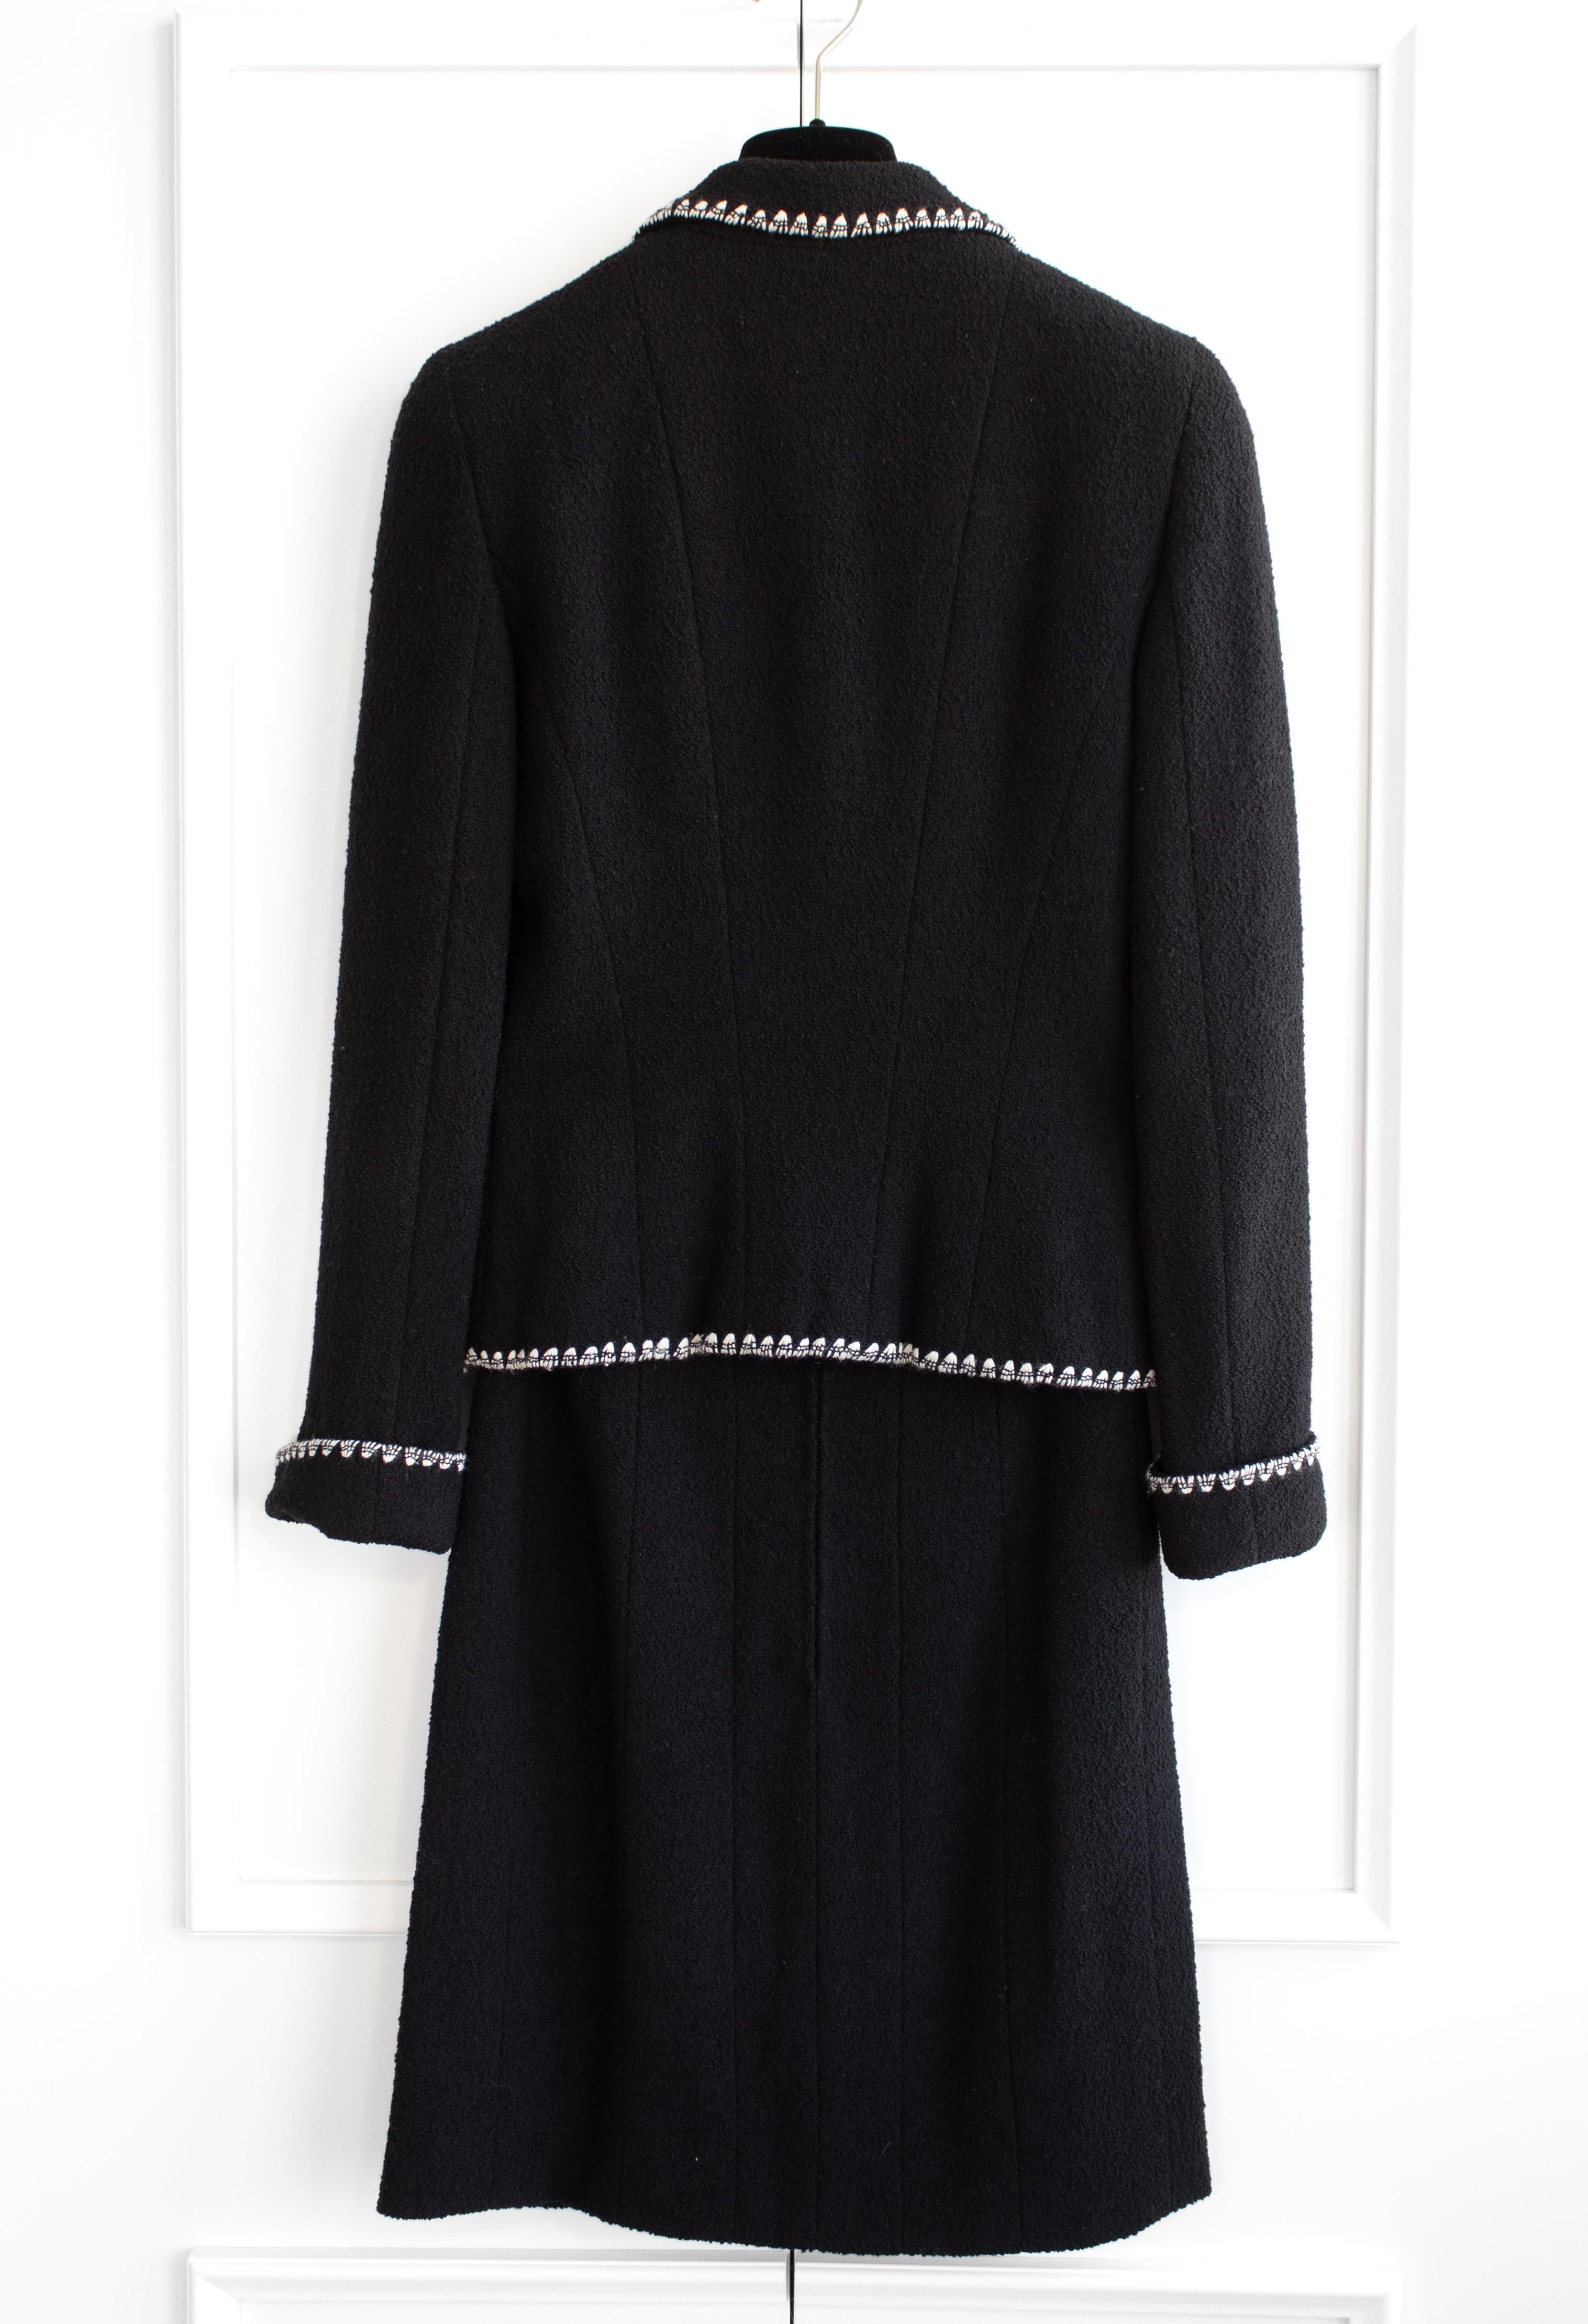 Chanel Vintage Haute Couture S/S 1995 Black White CC Tweed Jacket Skirt Suit 3